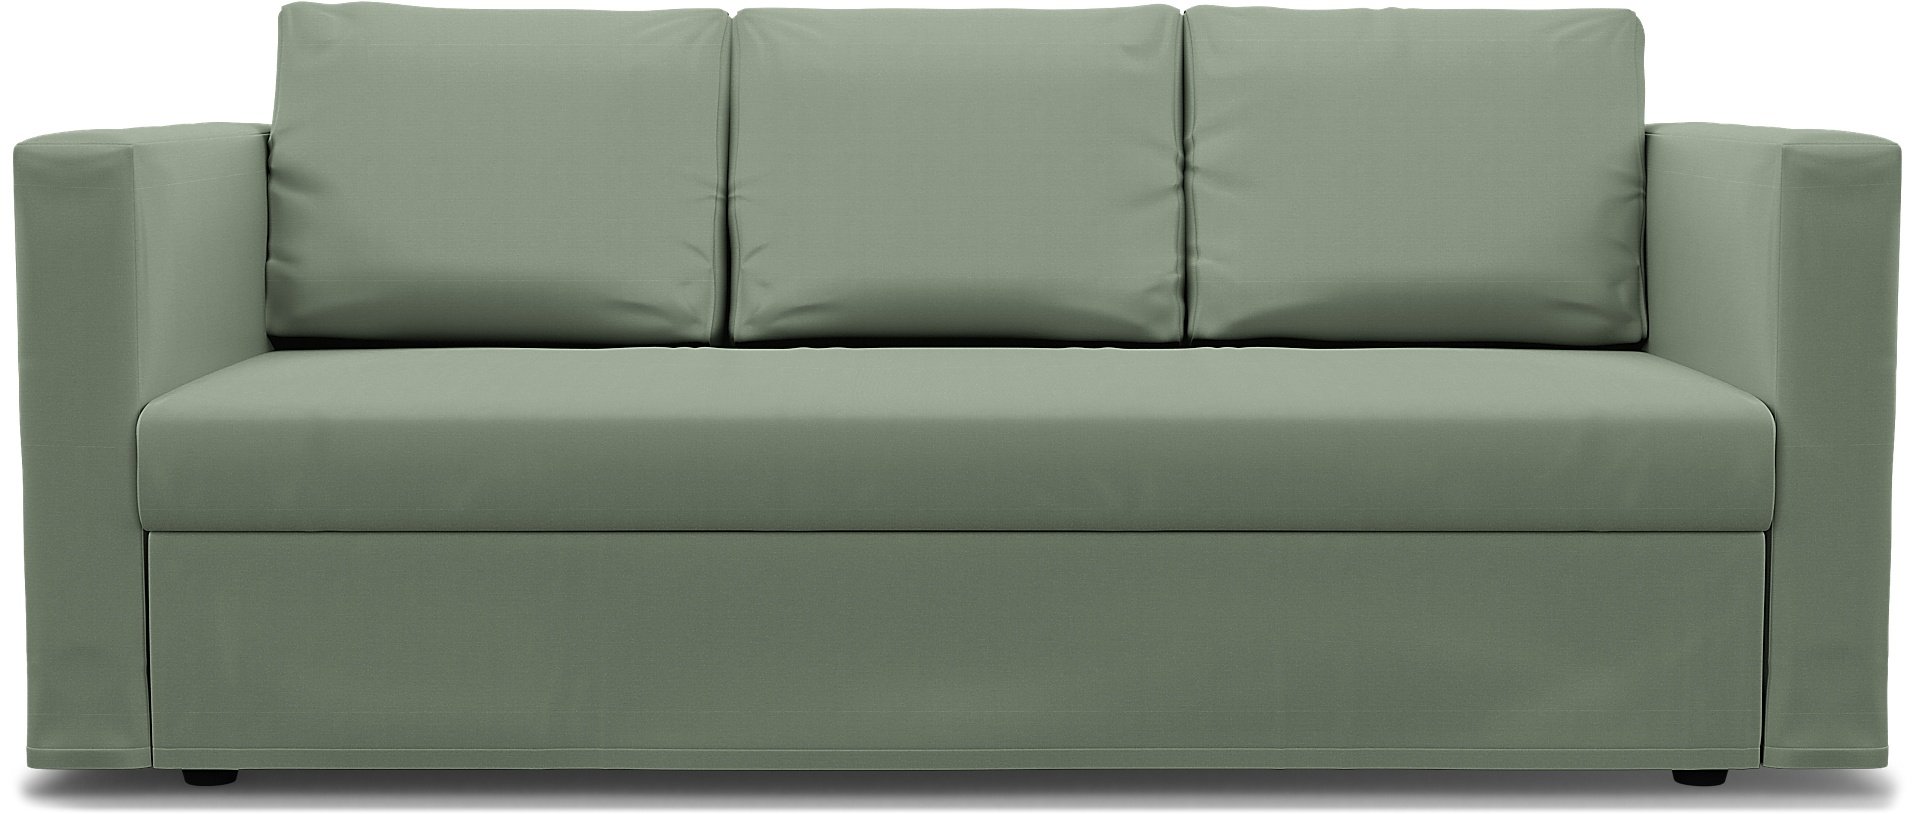 IKEA - Friheten 3 Seater Sofa Bed Cover, Seagrass, Cotton - Bemz